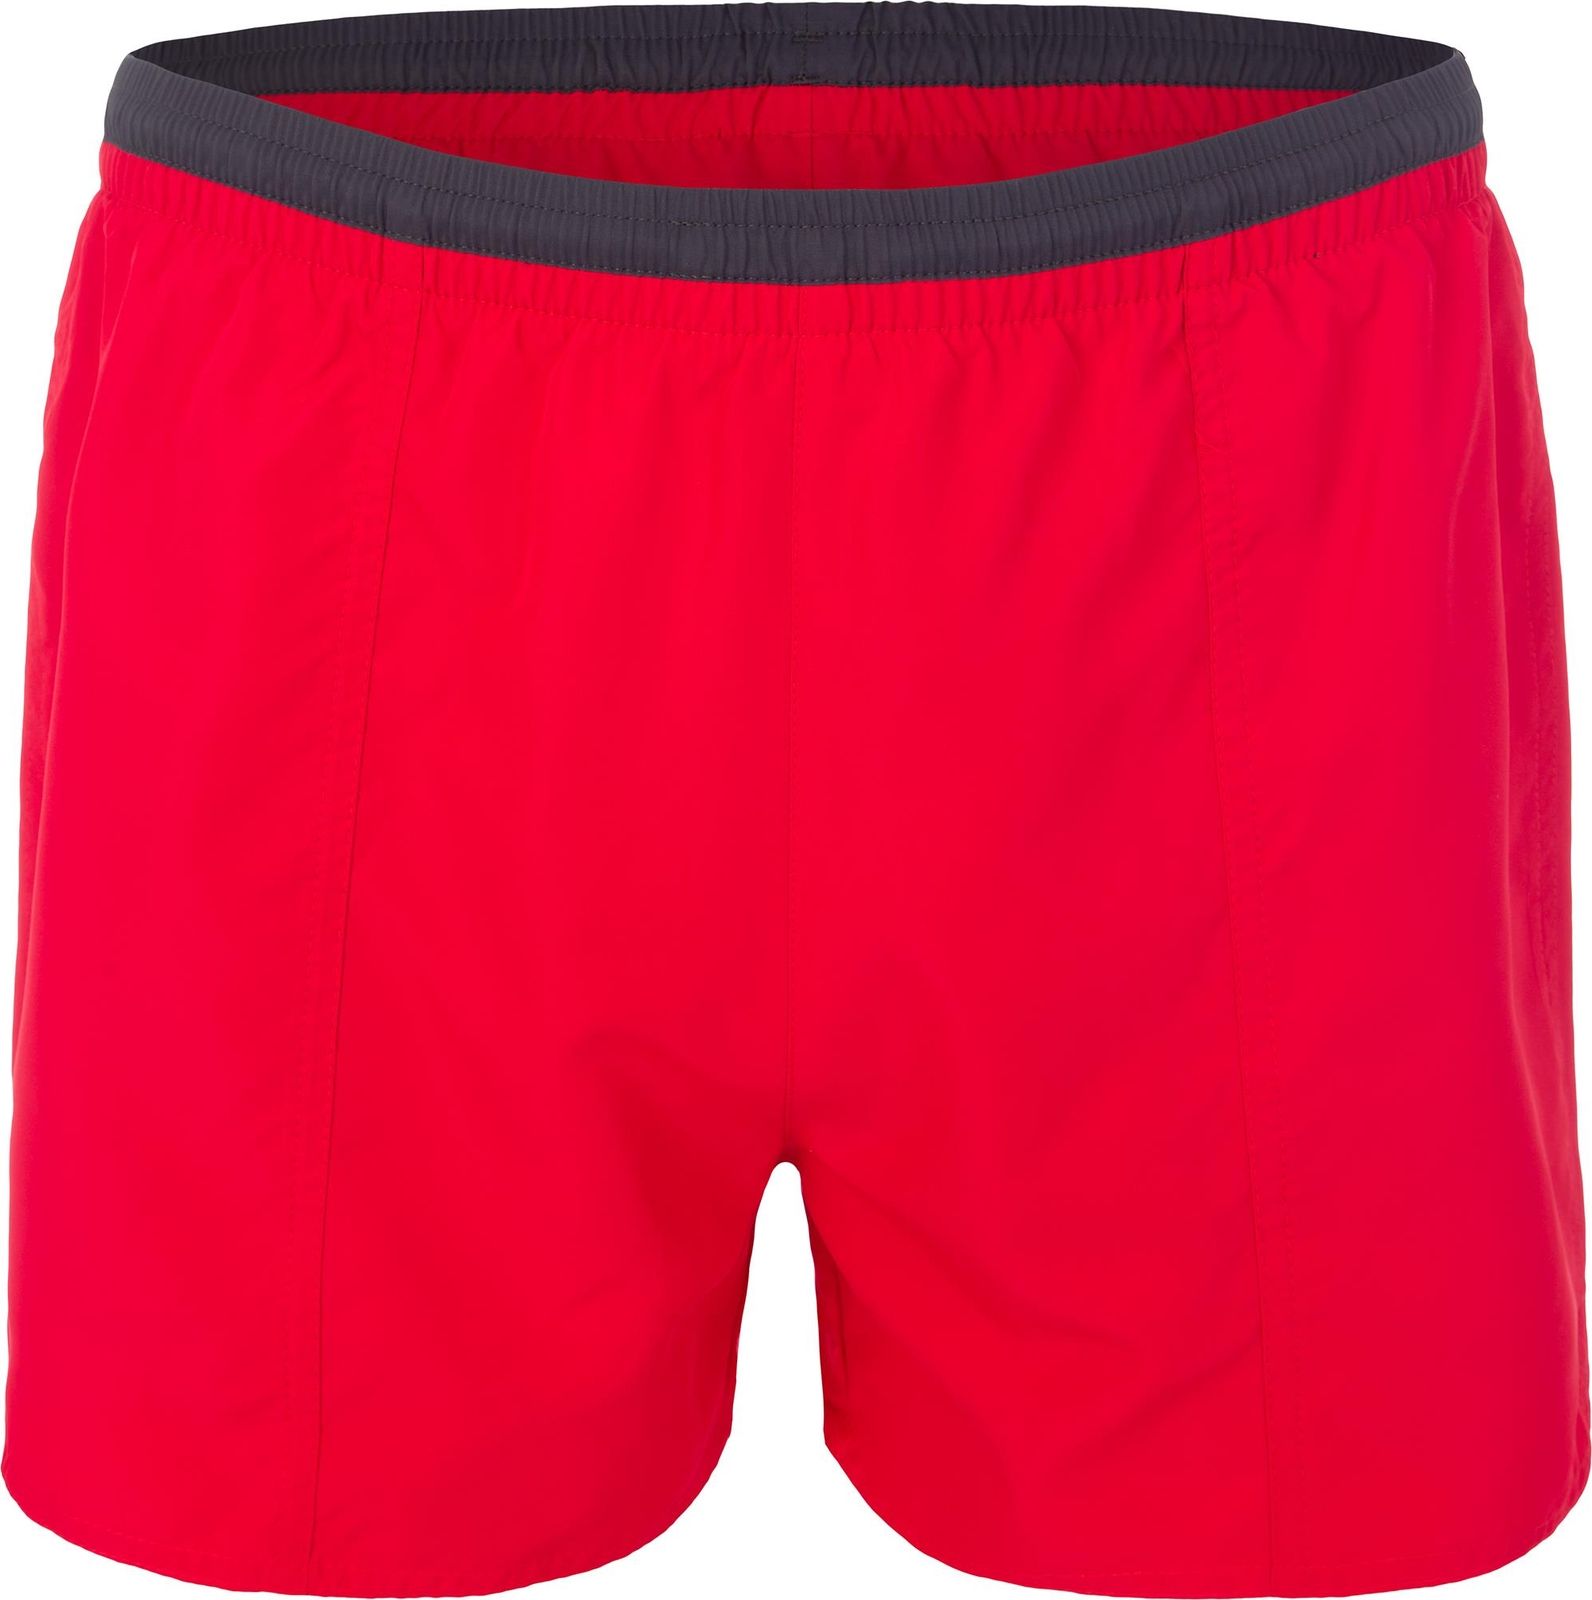     Joss Men's shorts, : . MSW40S6-R2.  52